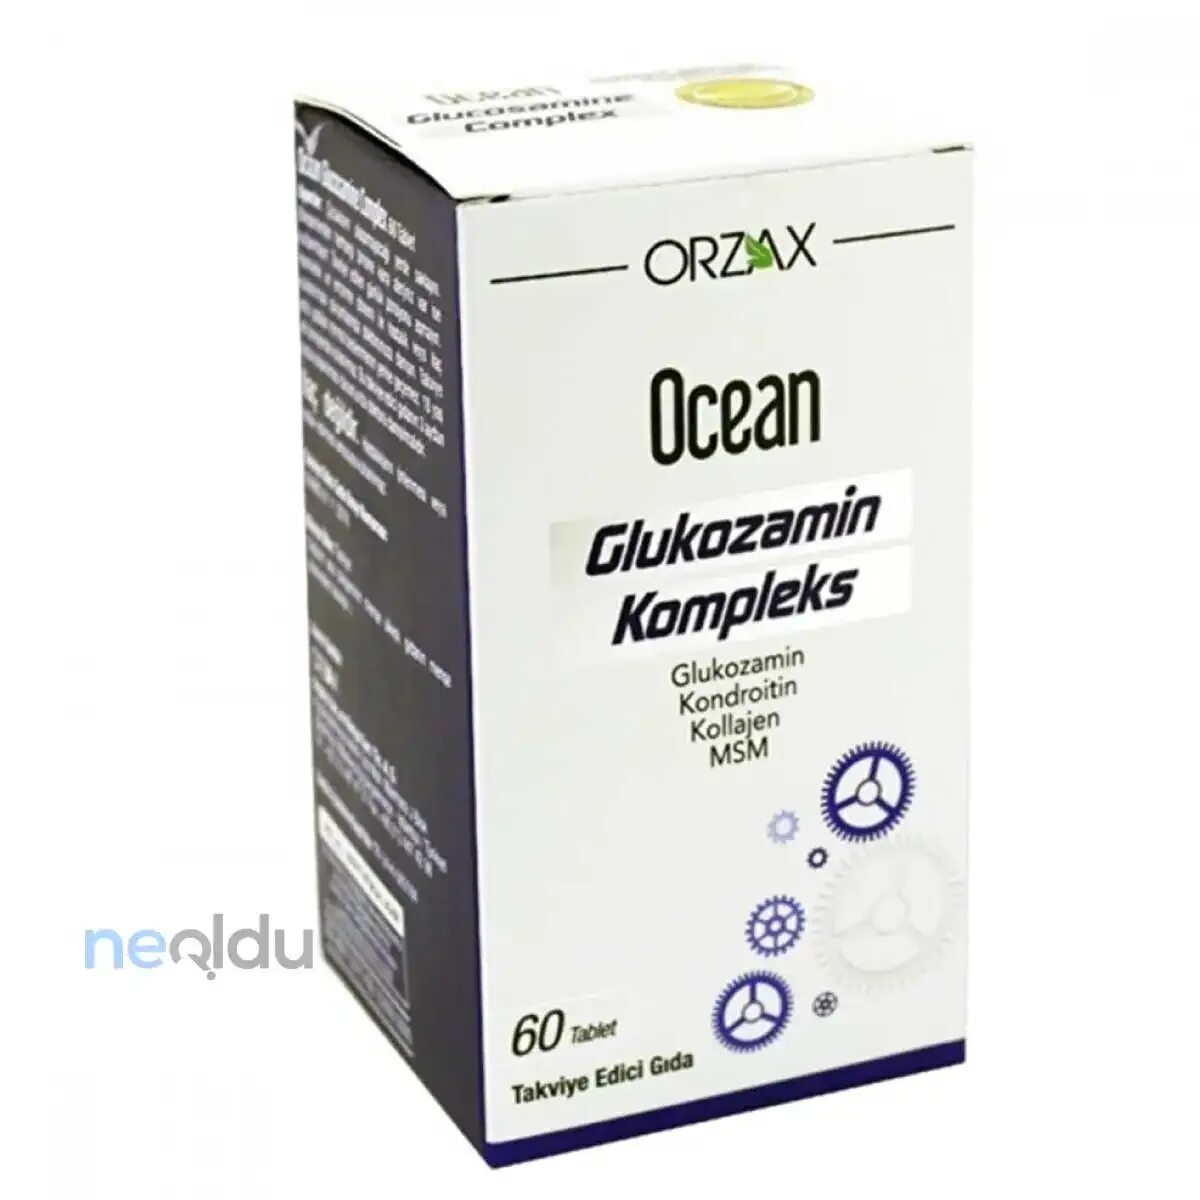 Orzax Glucosamine Complex. Ocean Ocean Glukozamin kompleks 60 Tablet. Ocean Glucosamine Complex. Orzax Ocean Glucosamine Complex.